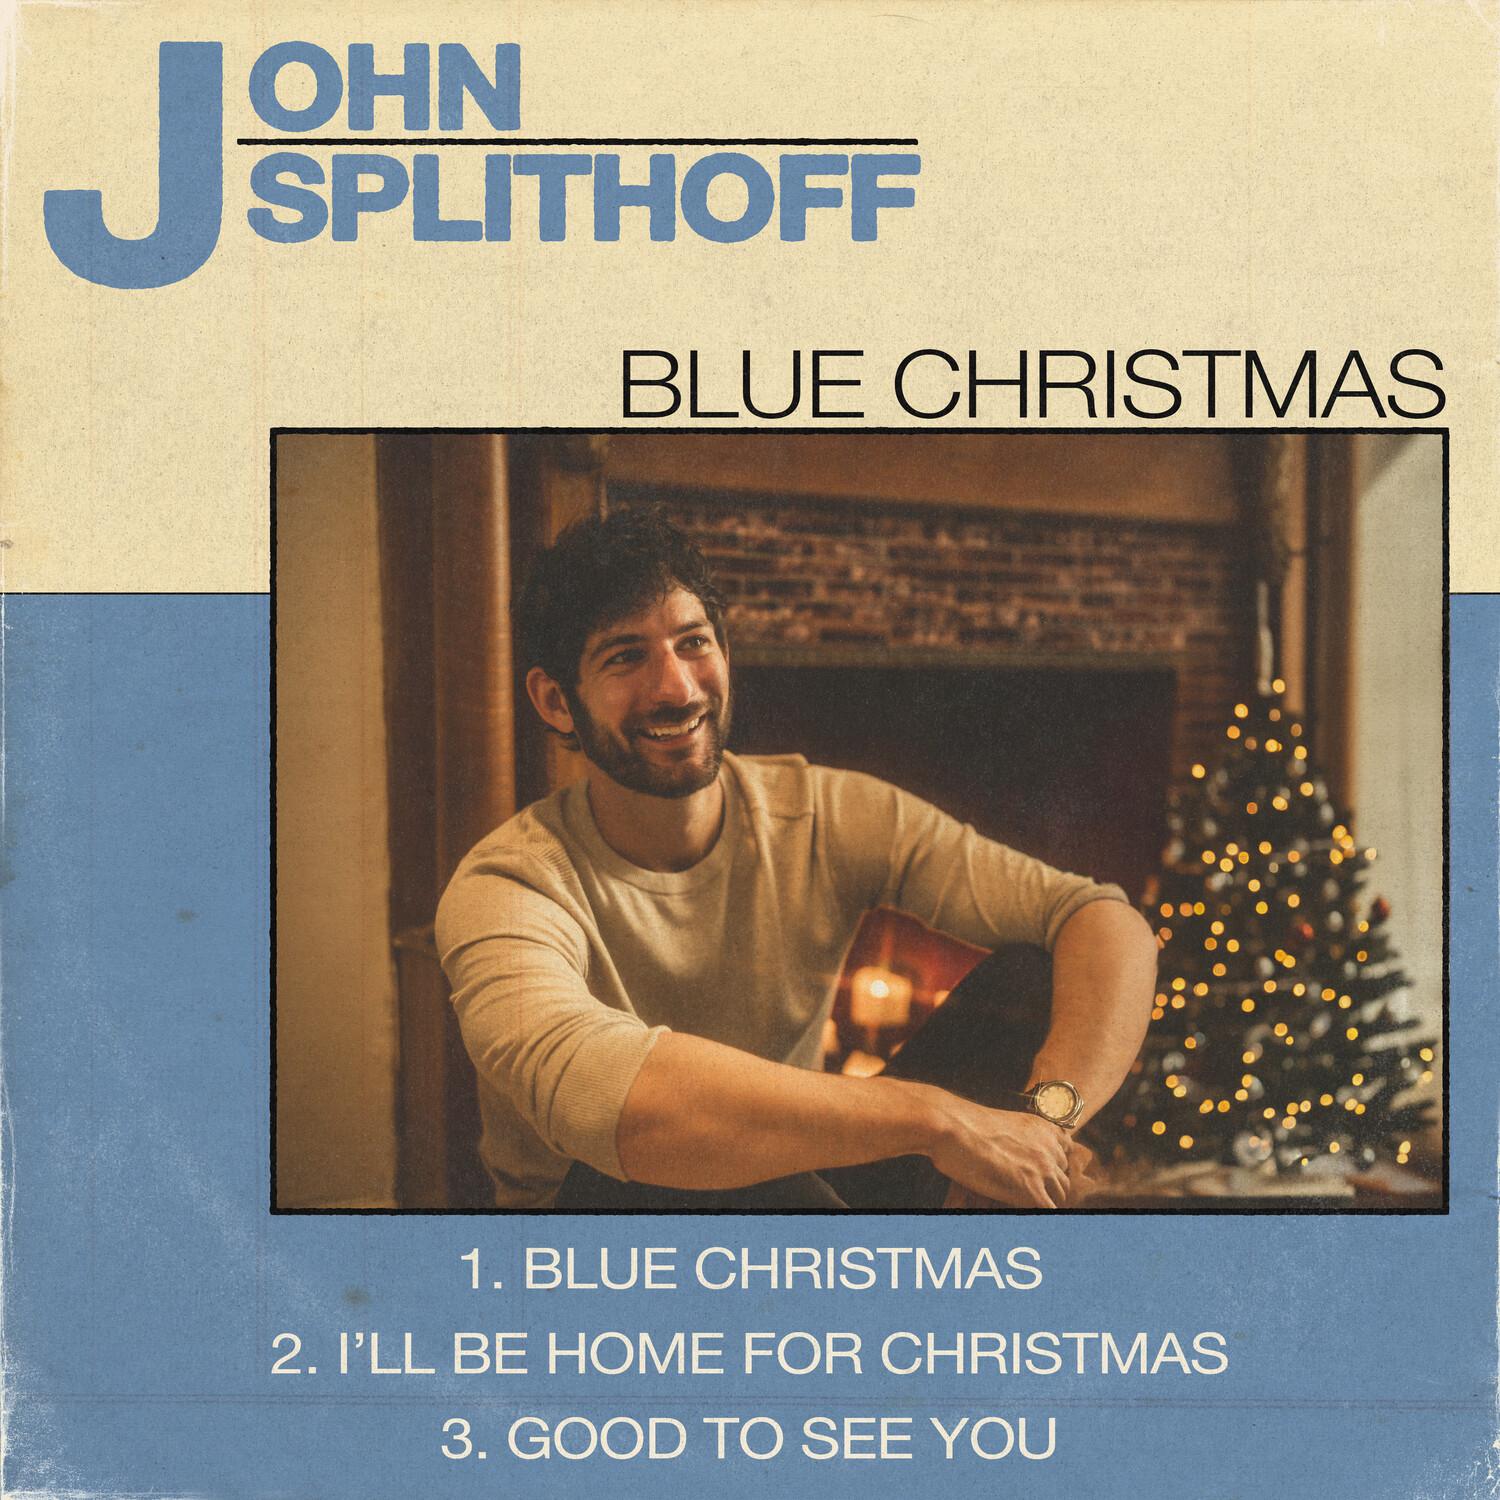 John Splithoff - Good To See You (bonus track)